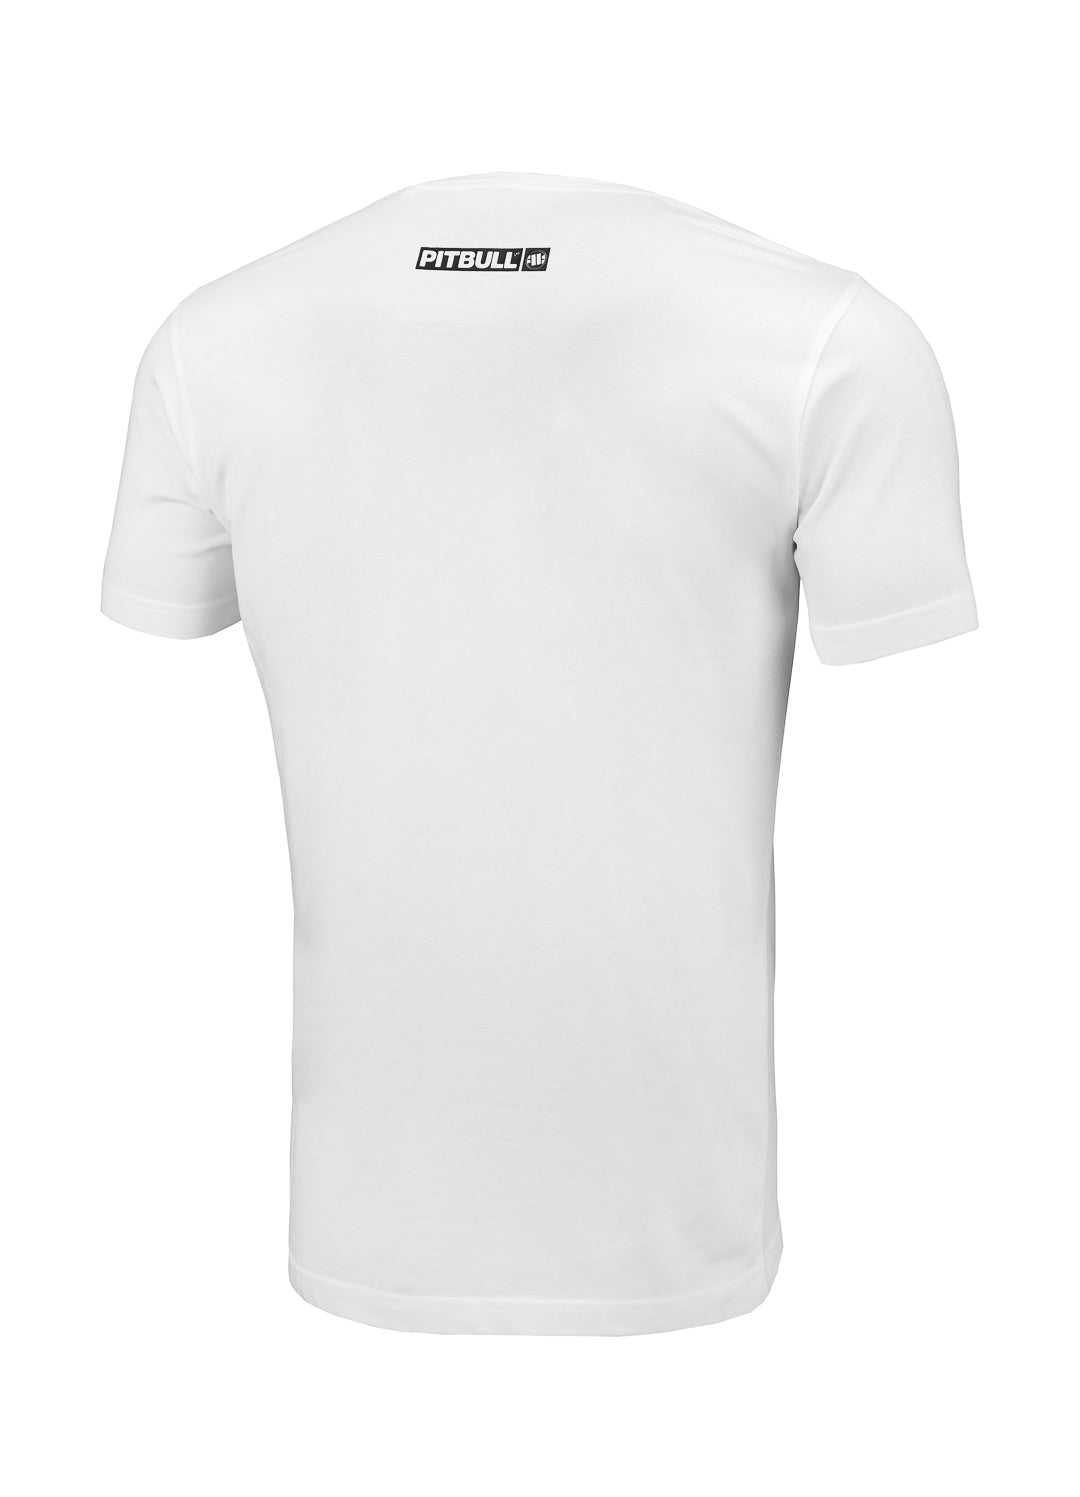 HILLTOP Slim Fit T-shirt White.